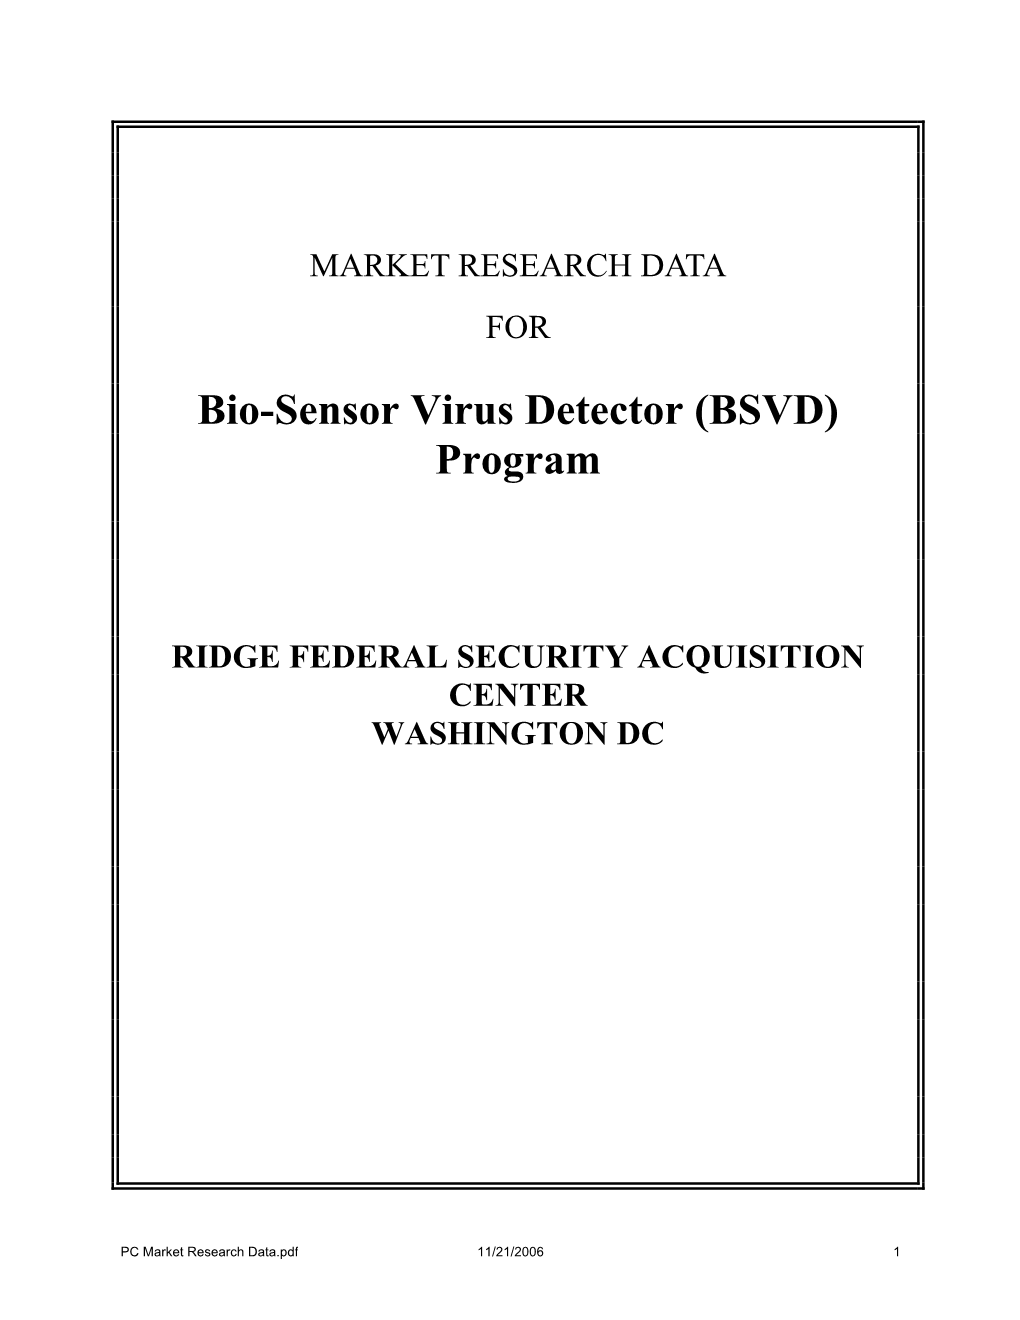 Bio-Sensor Virus Detector (BSVD) Program